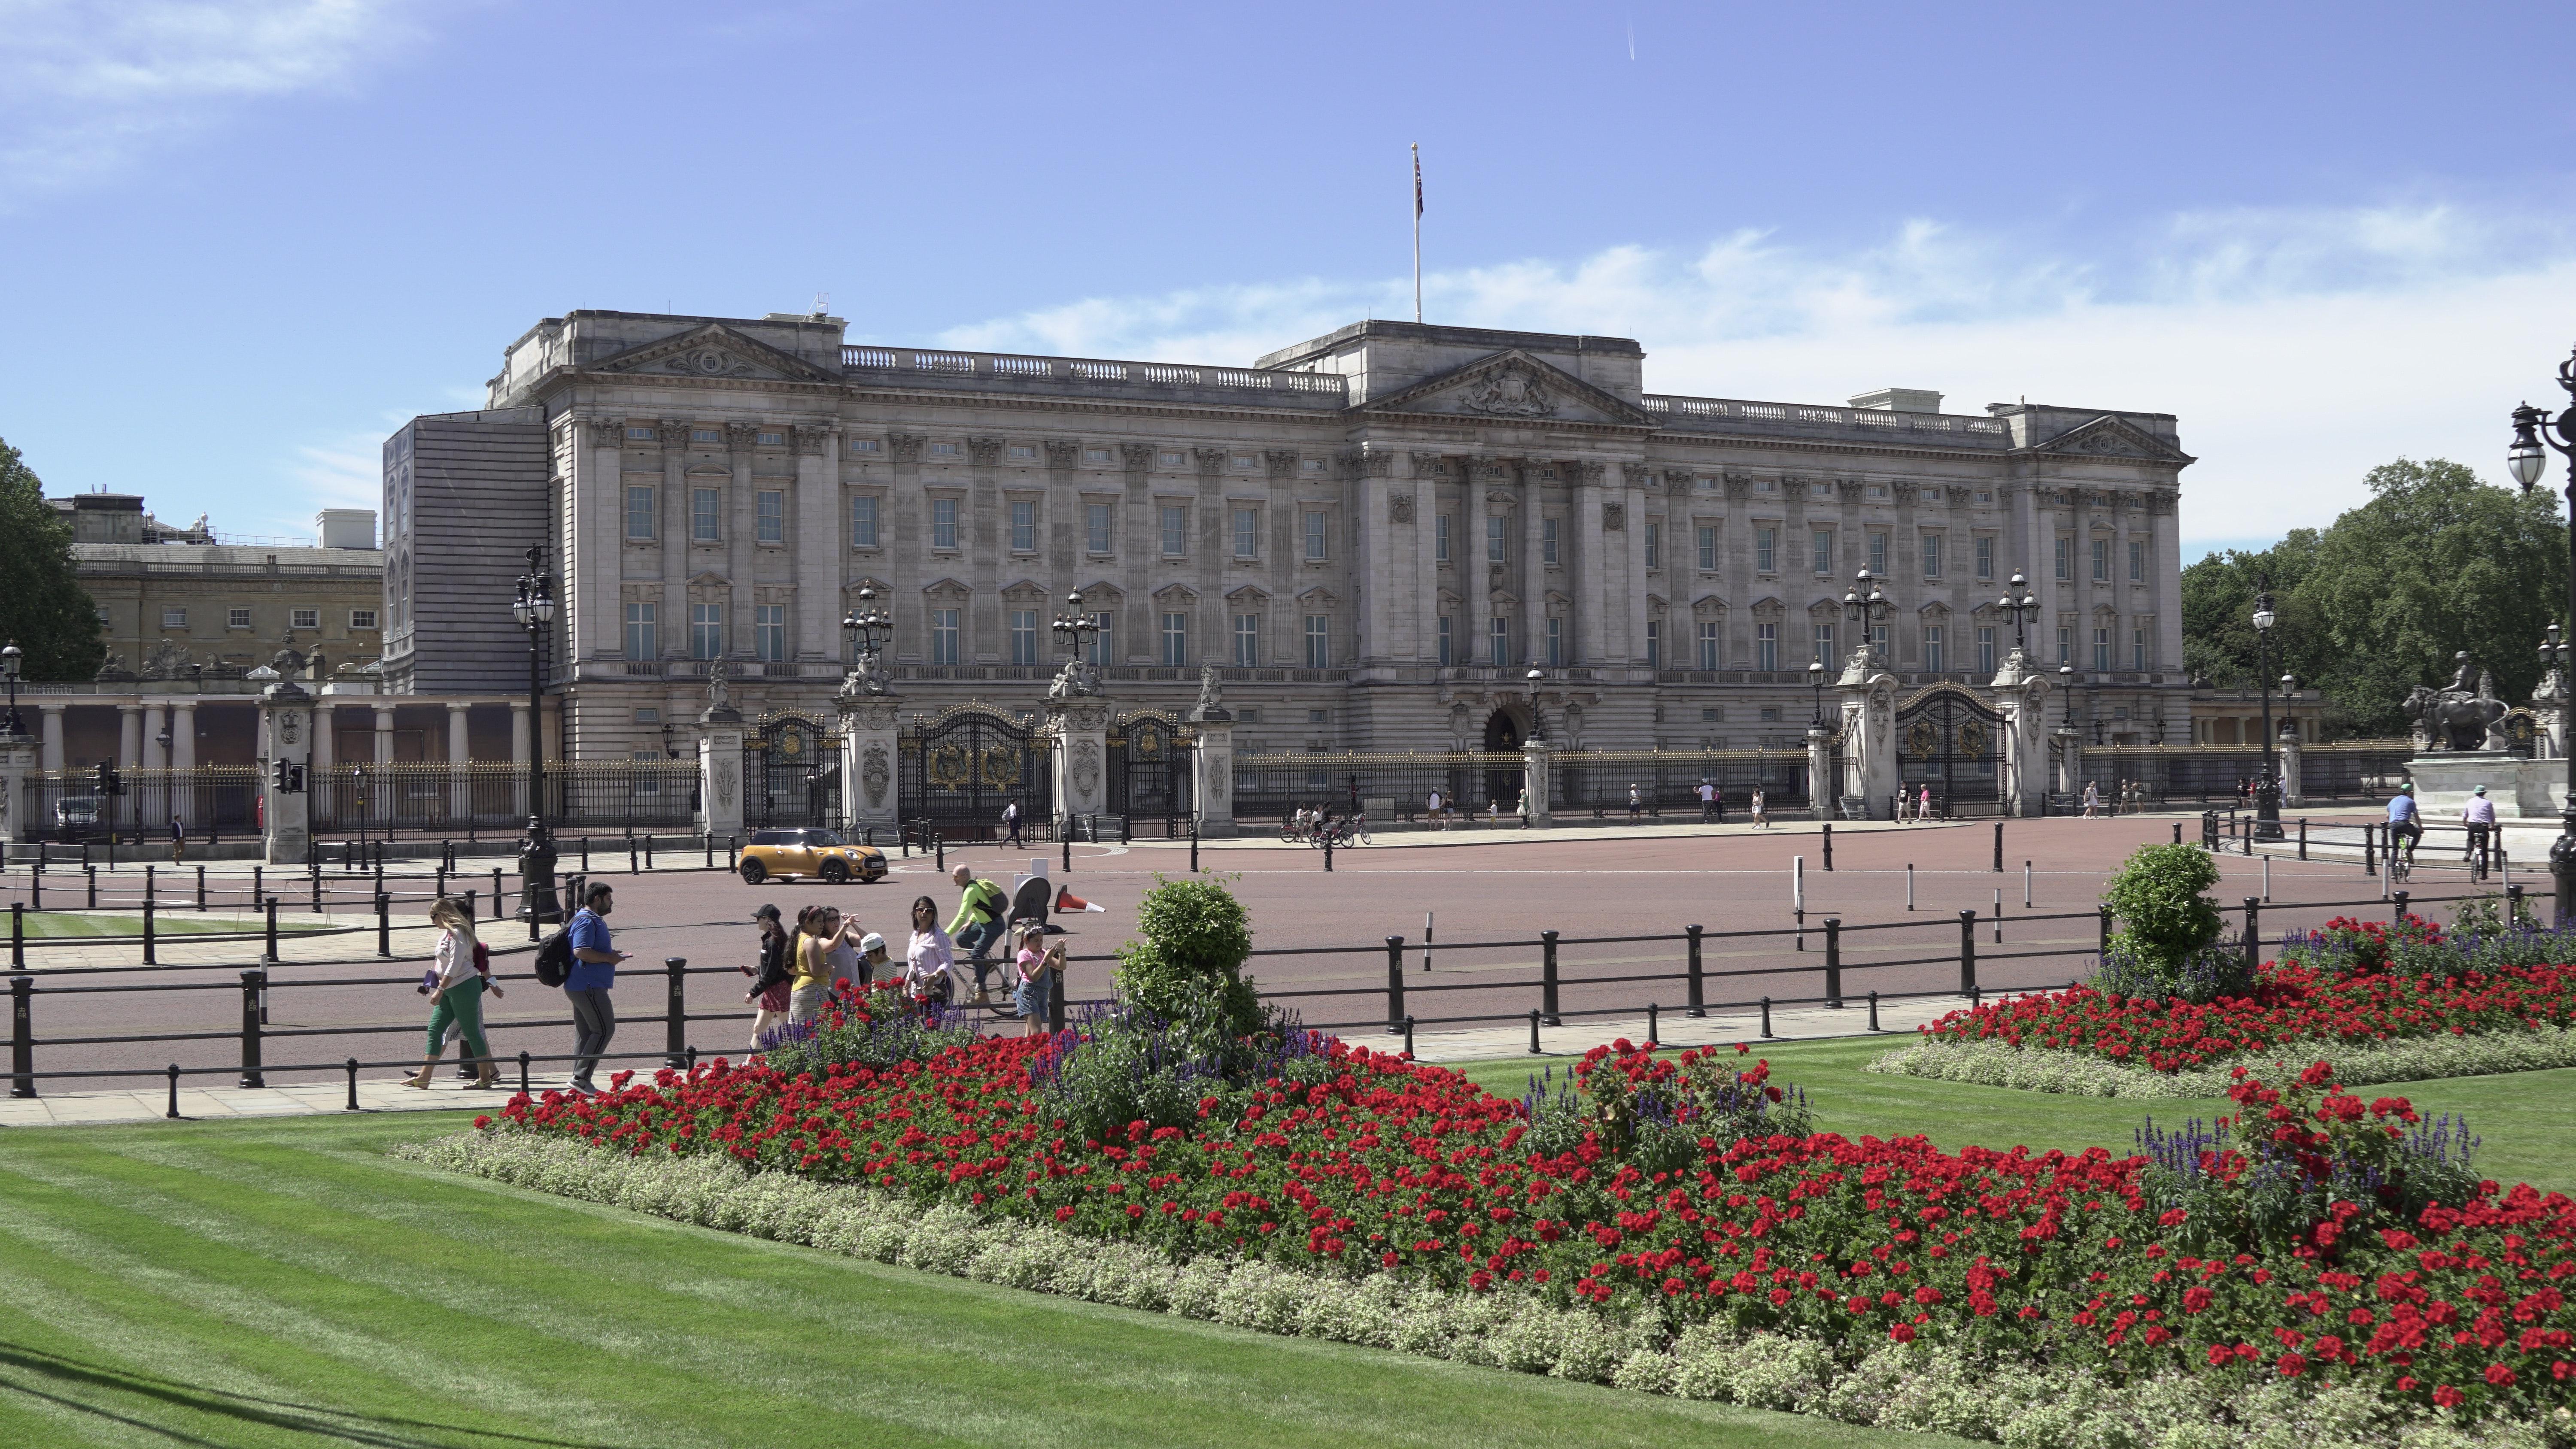  How Many Floors Does Buckingham Palace Have 